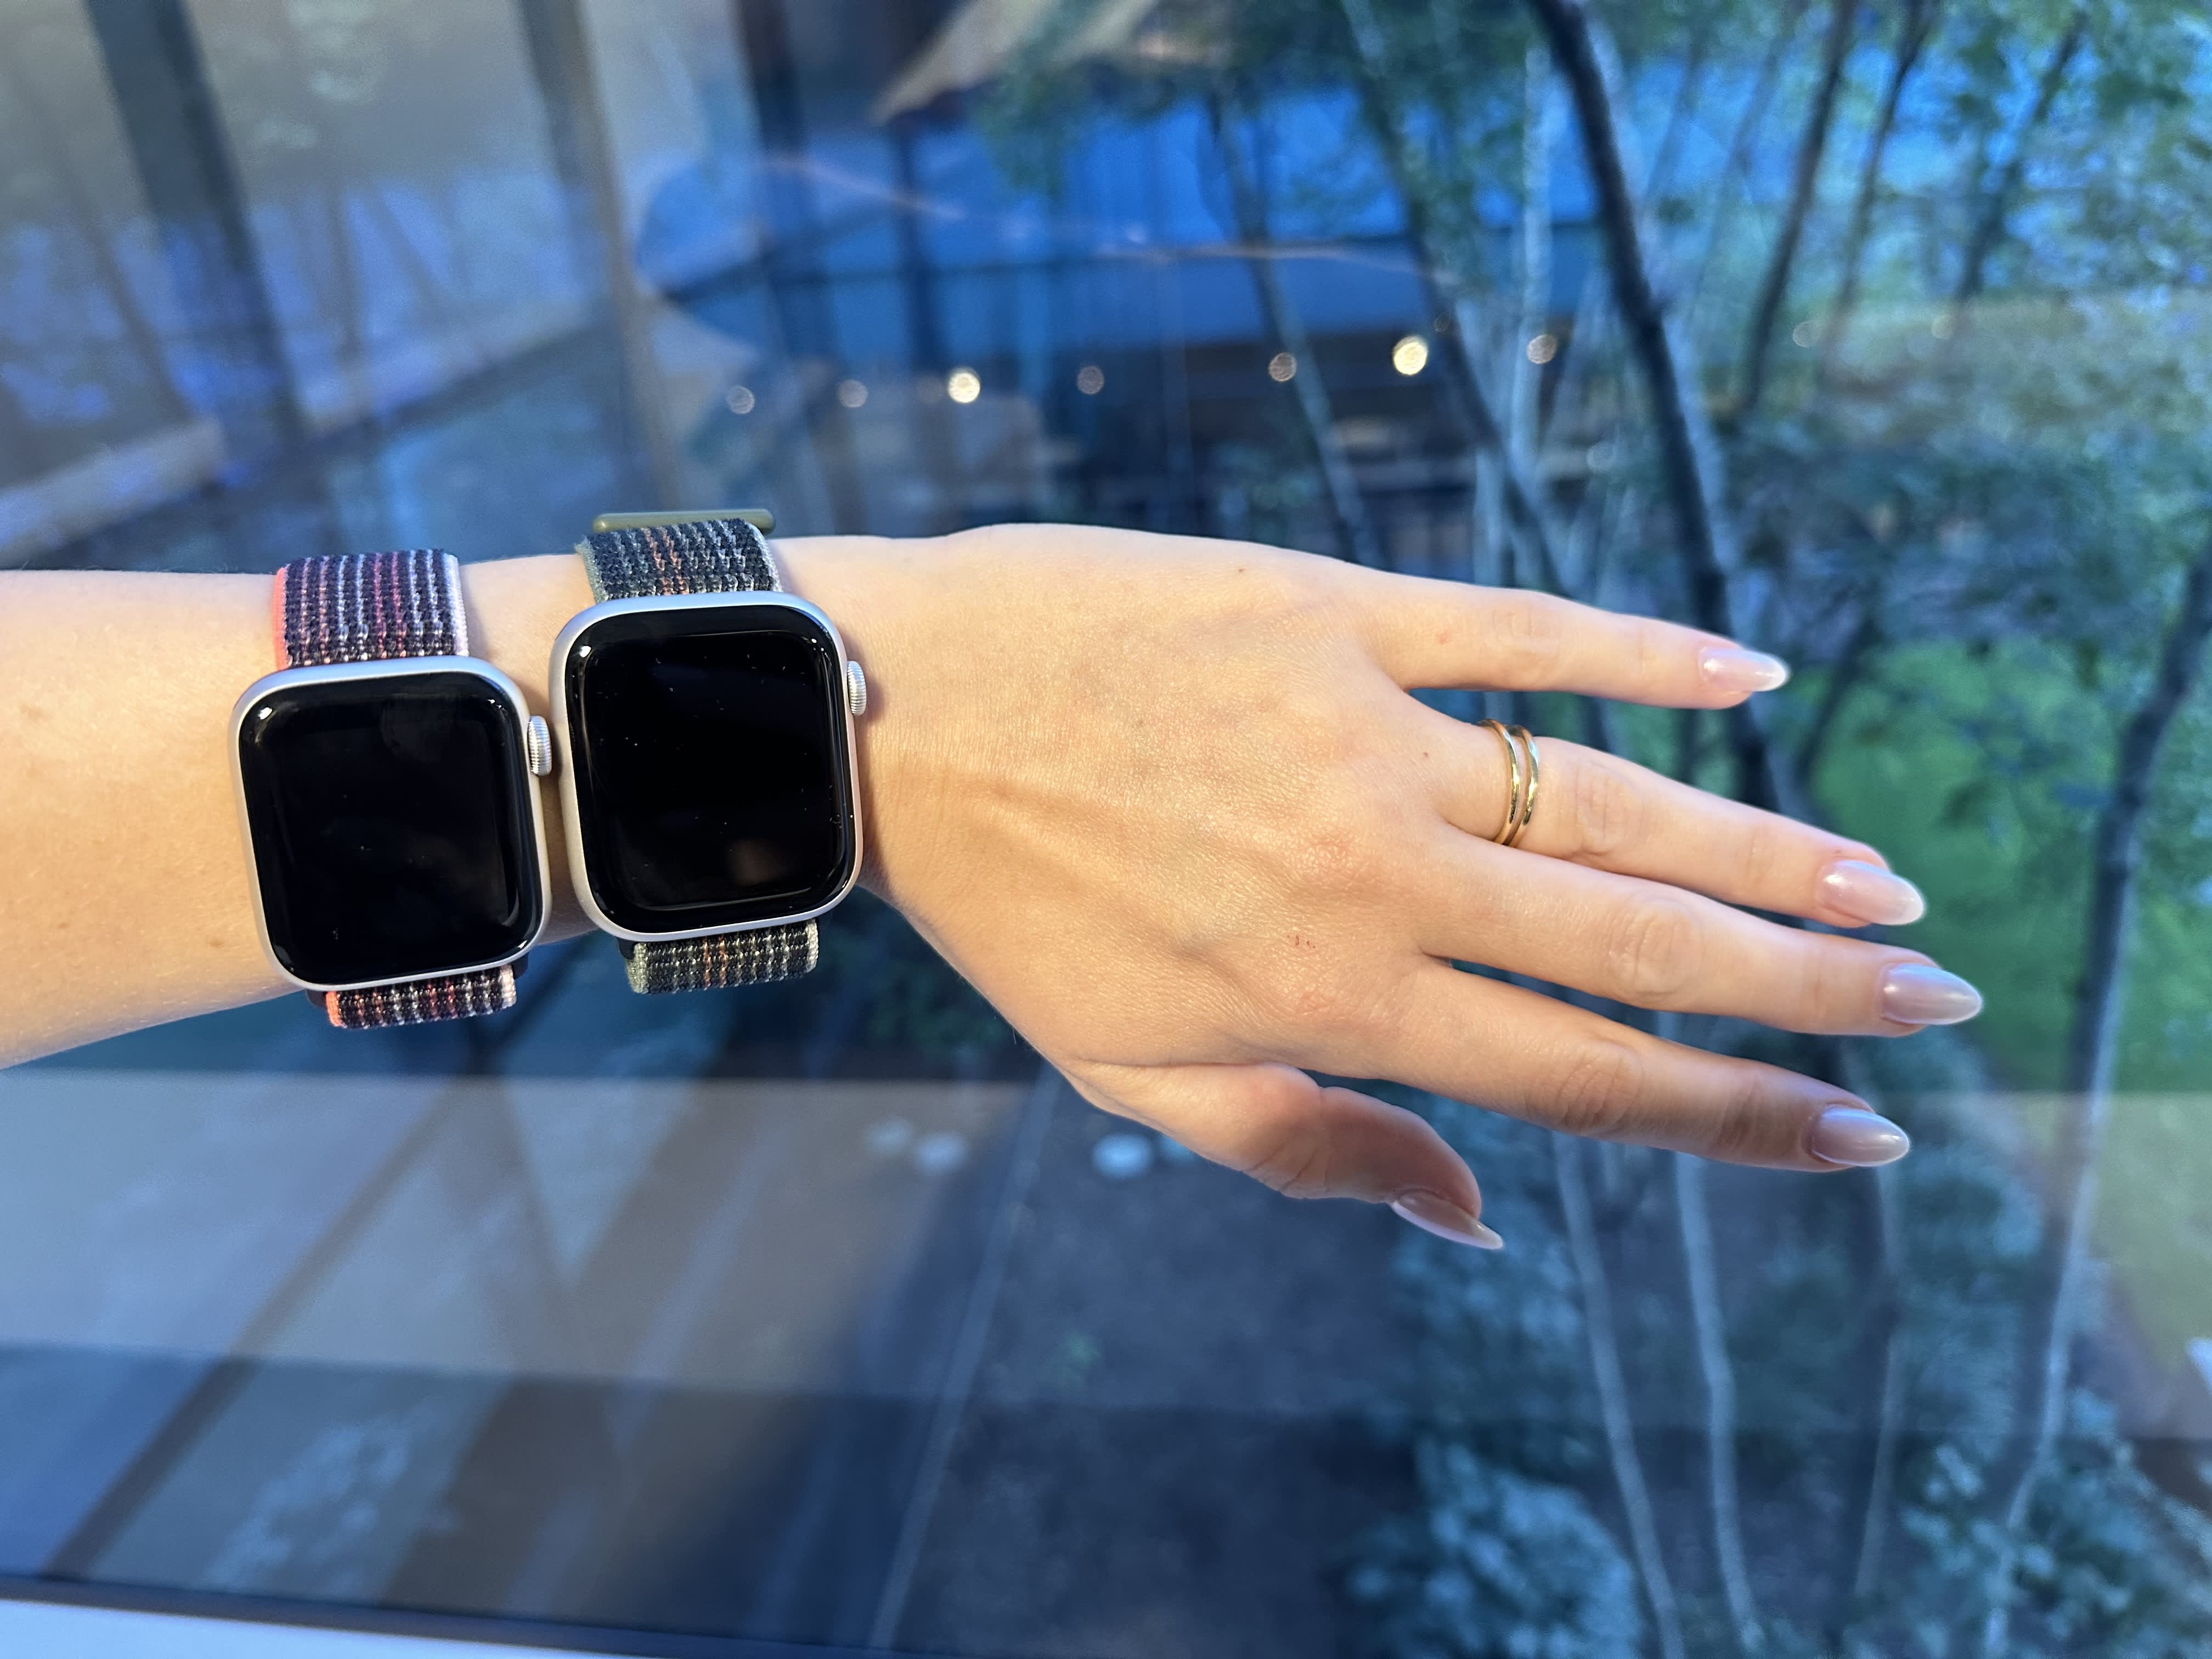 Đồng hồ Apple Watch.